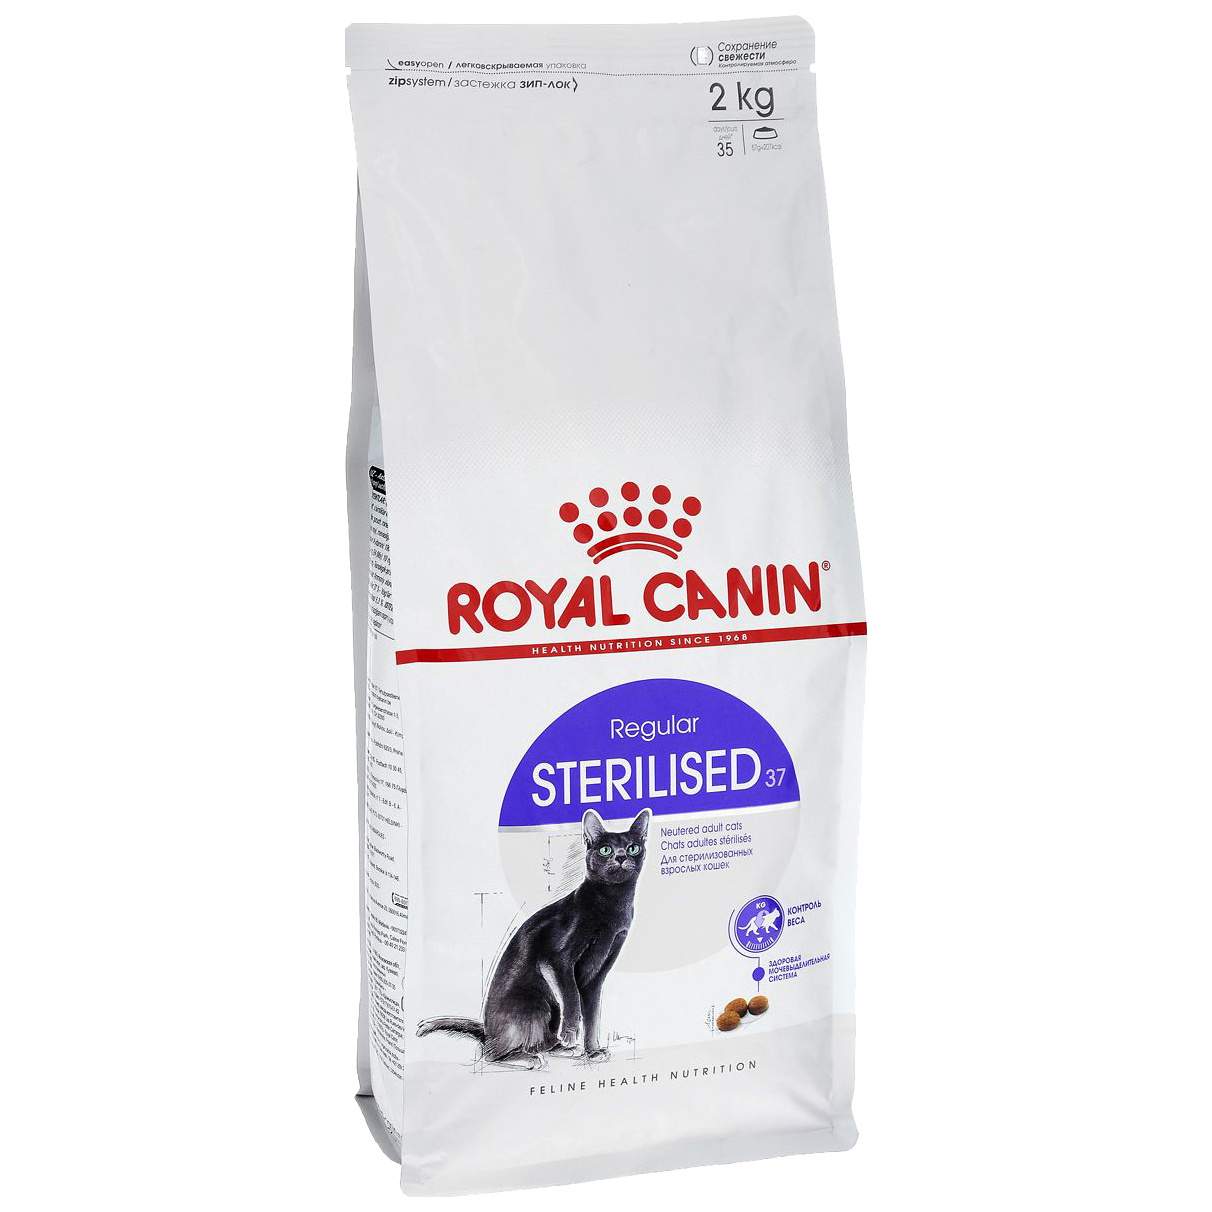 Сухой корм для кошек ROYAL CANIN Sterilised 37, для стерилизованных, 2кг